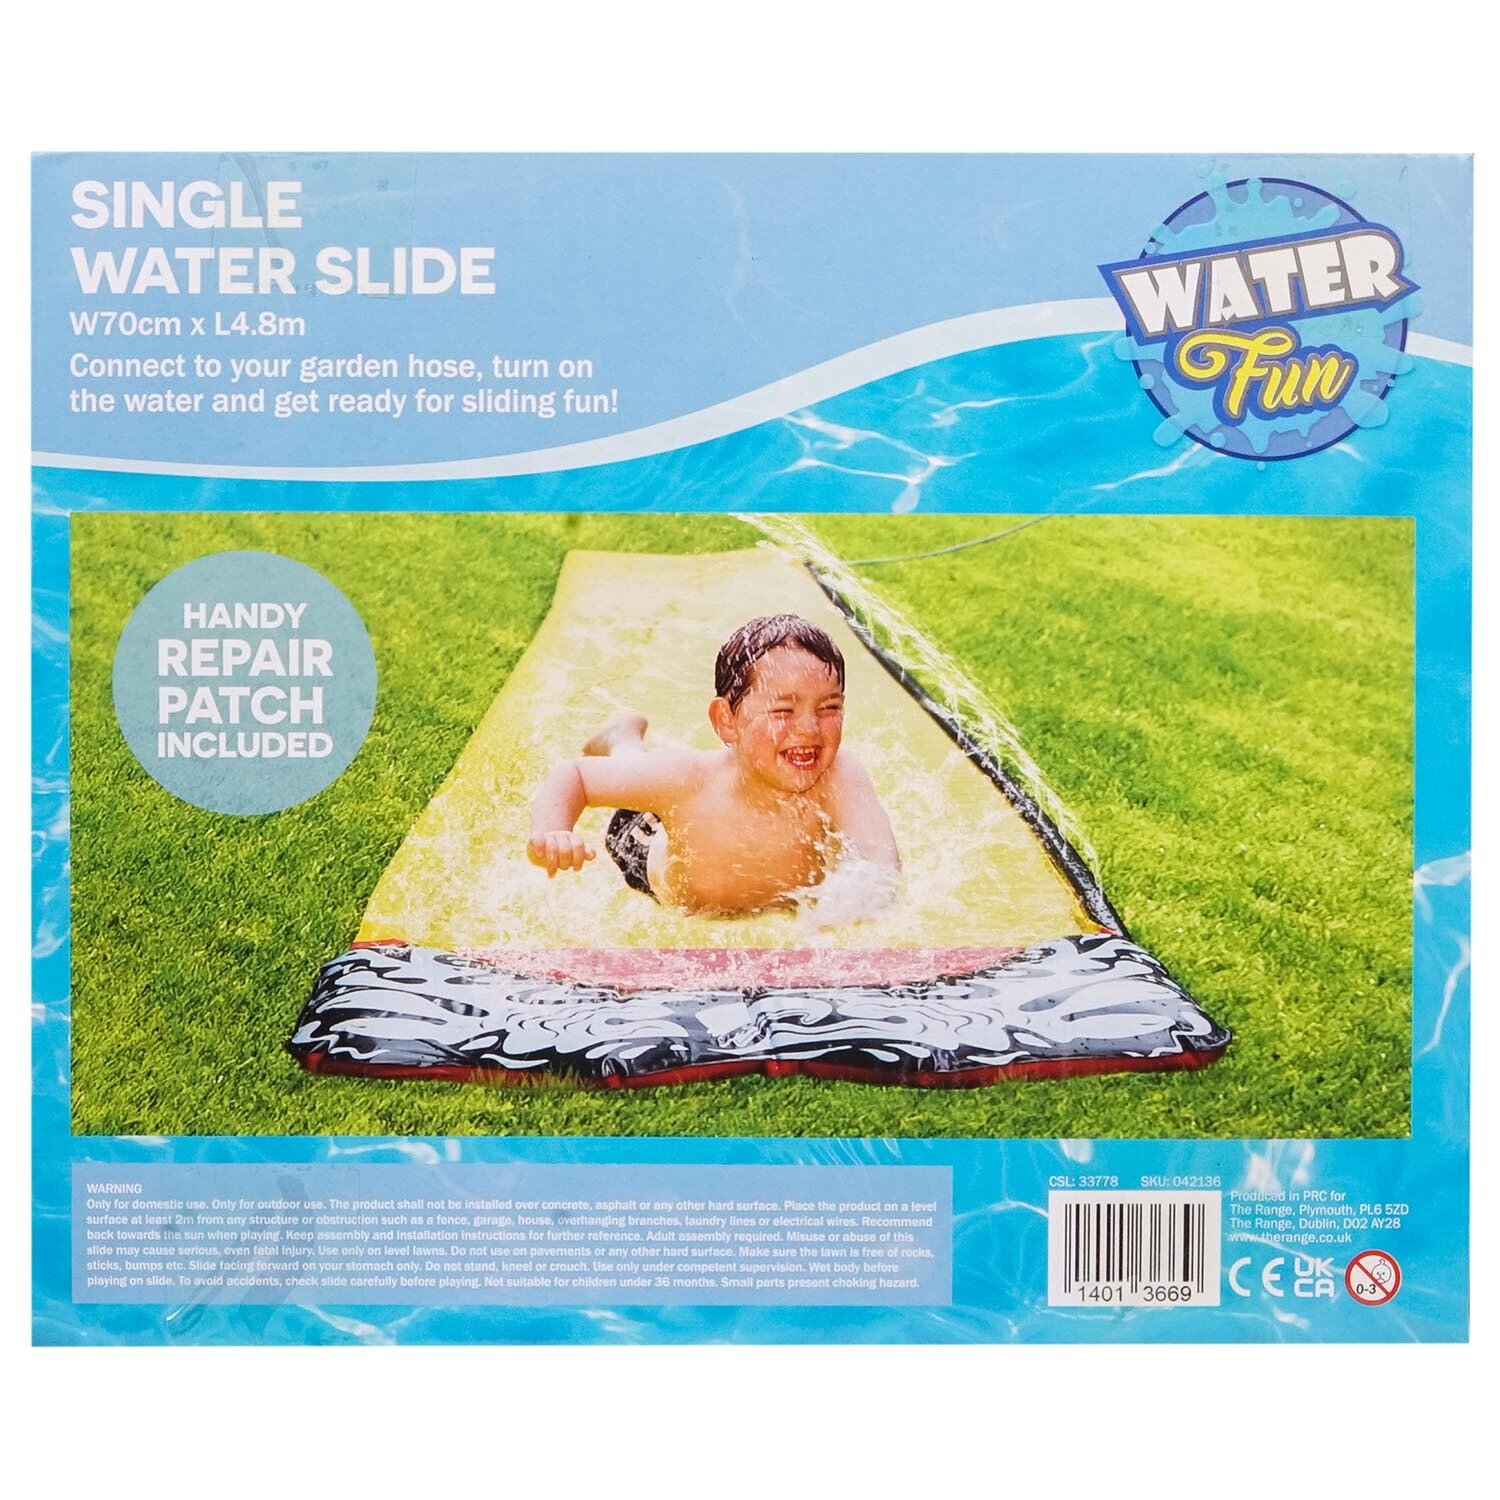 Single Water Slide 70cm x 4.8m Image